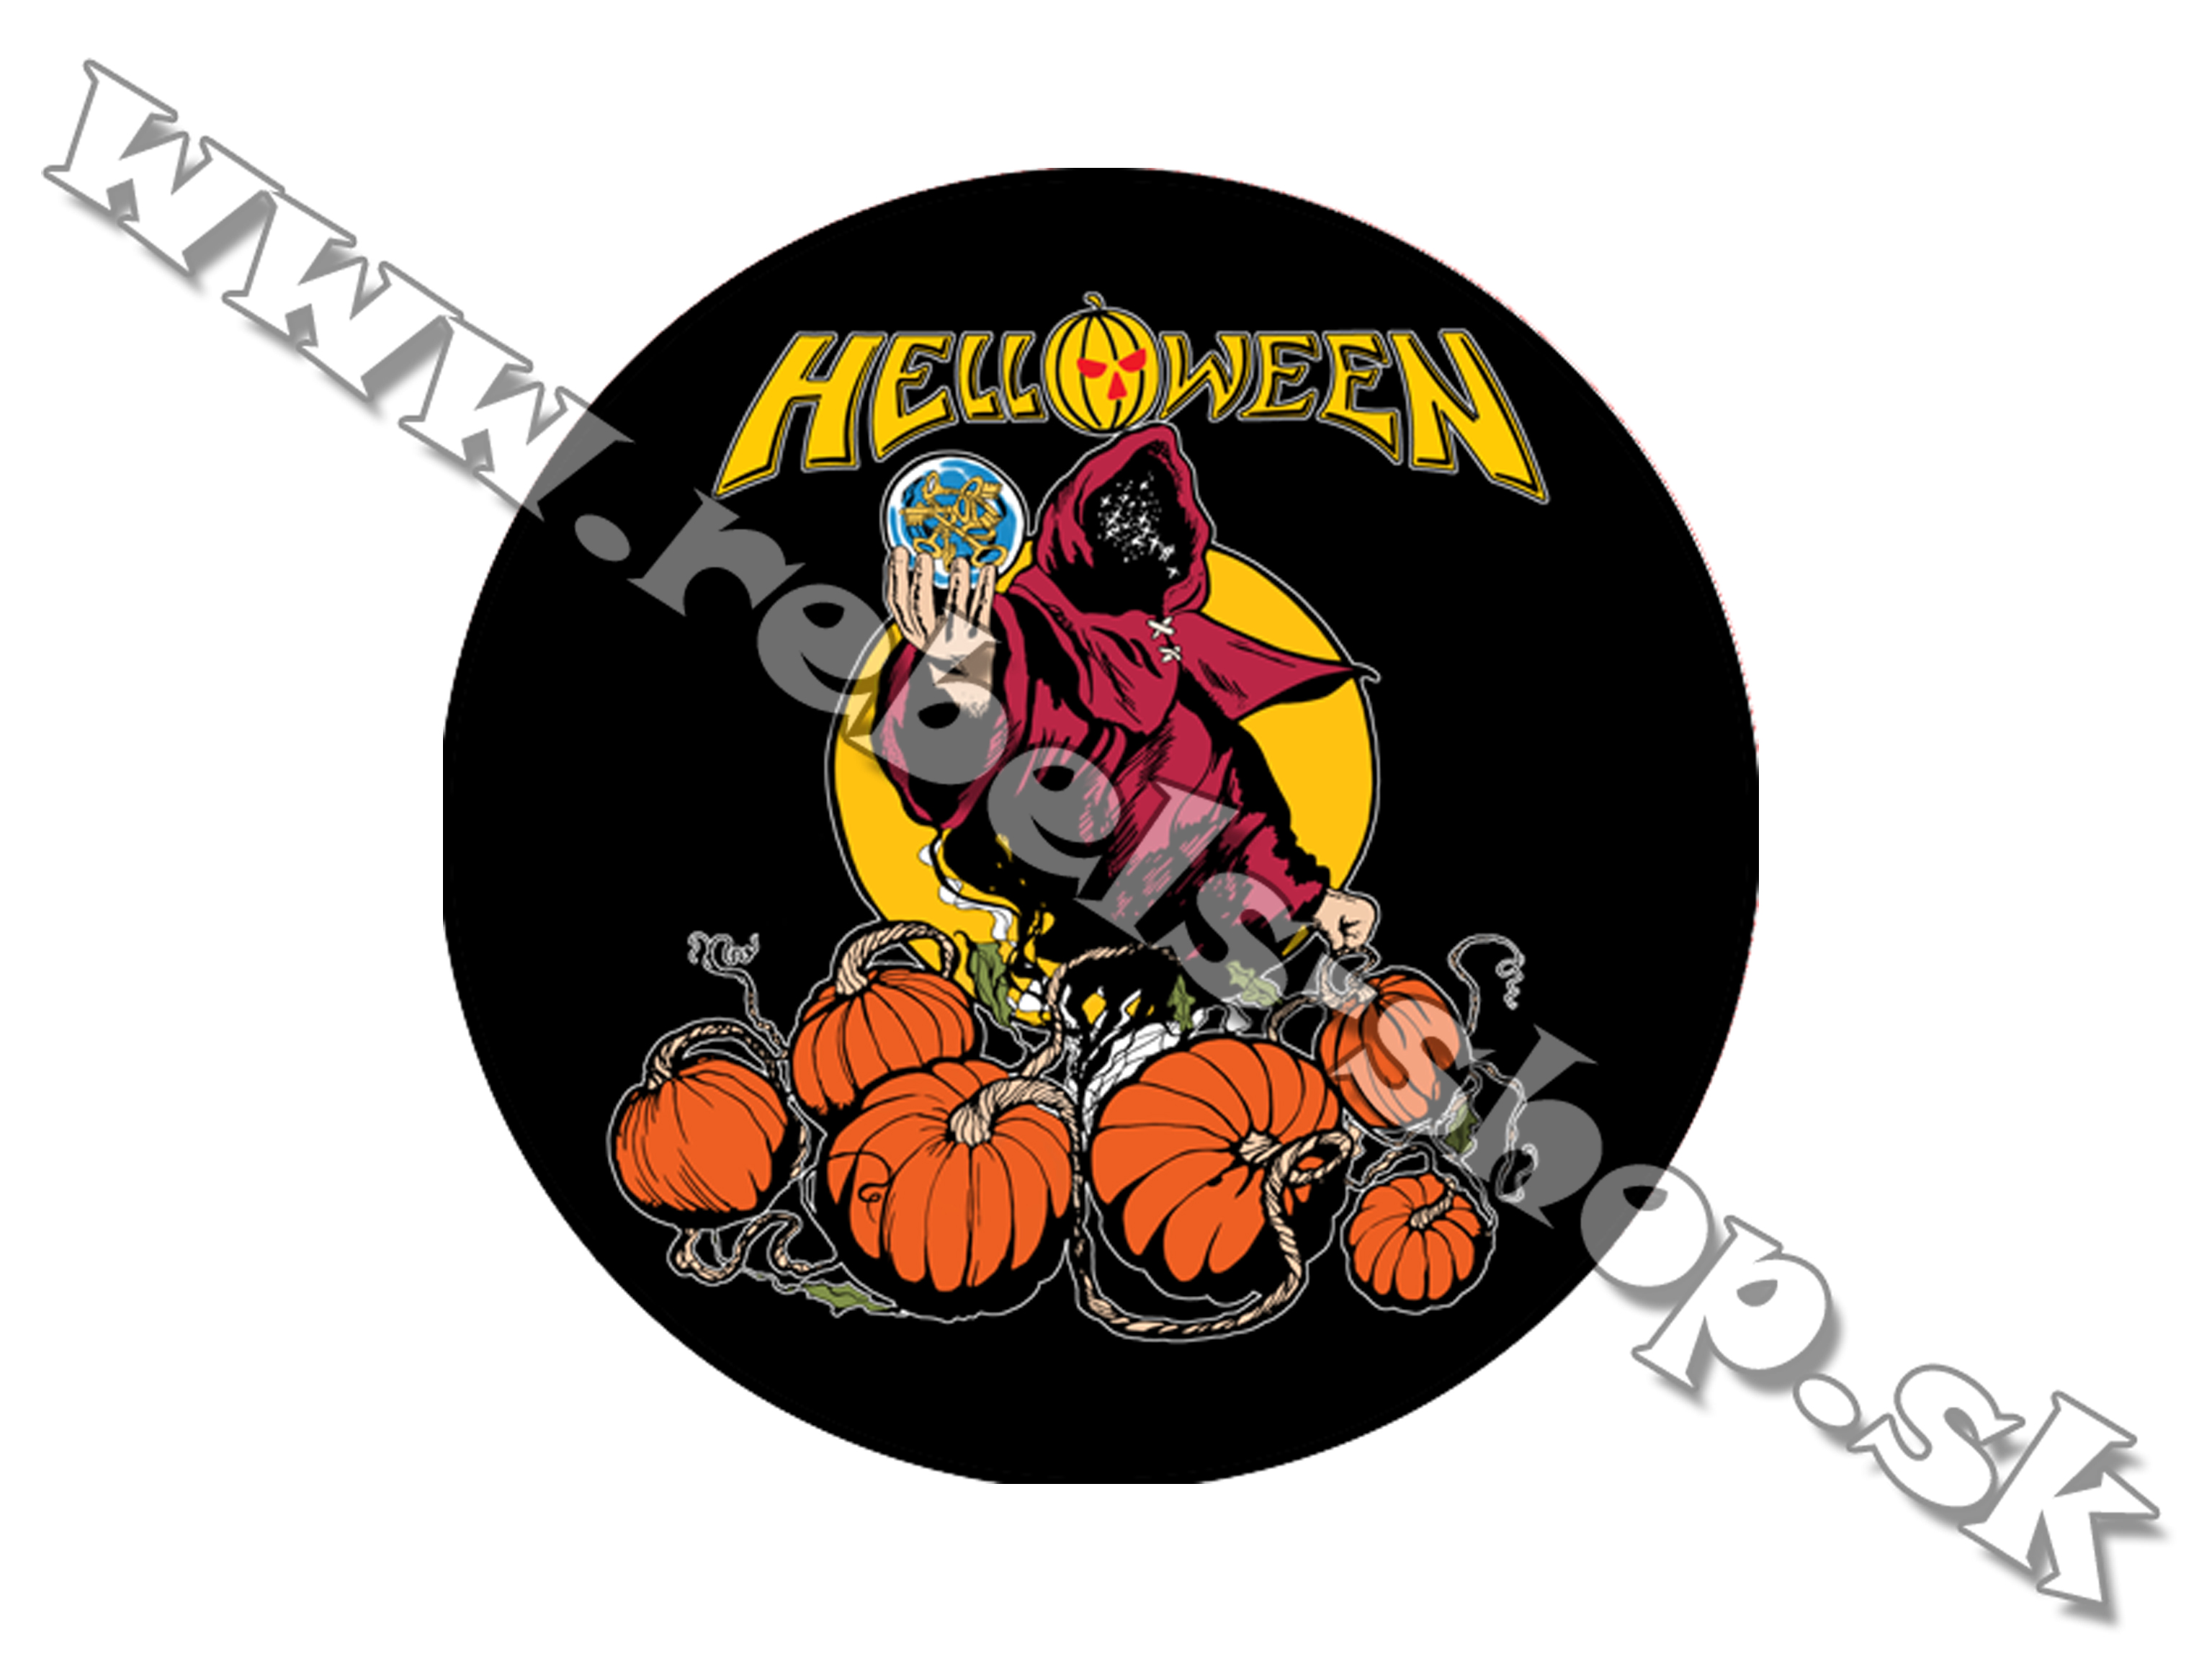 Odznak "Helloween"